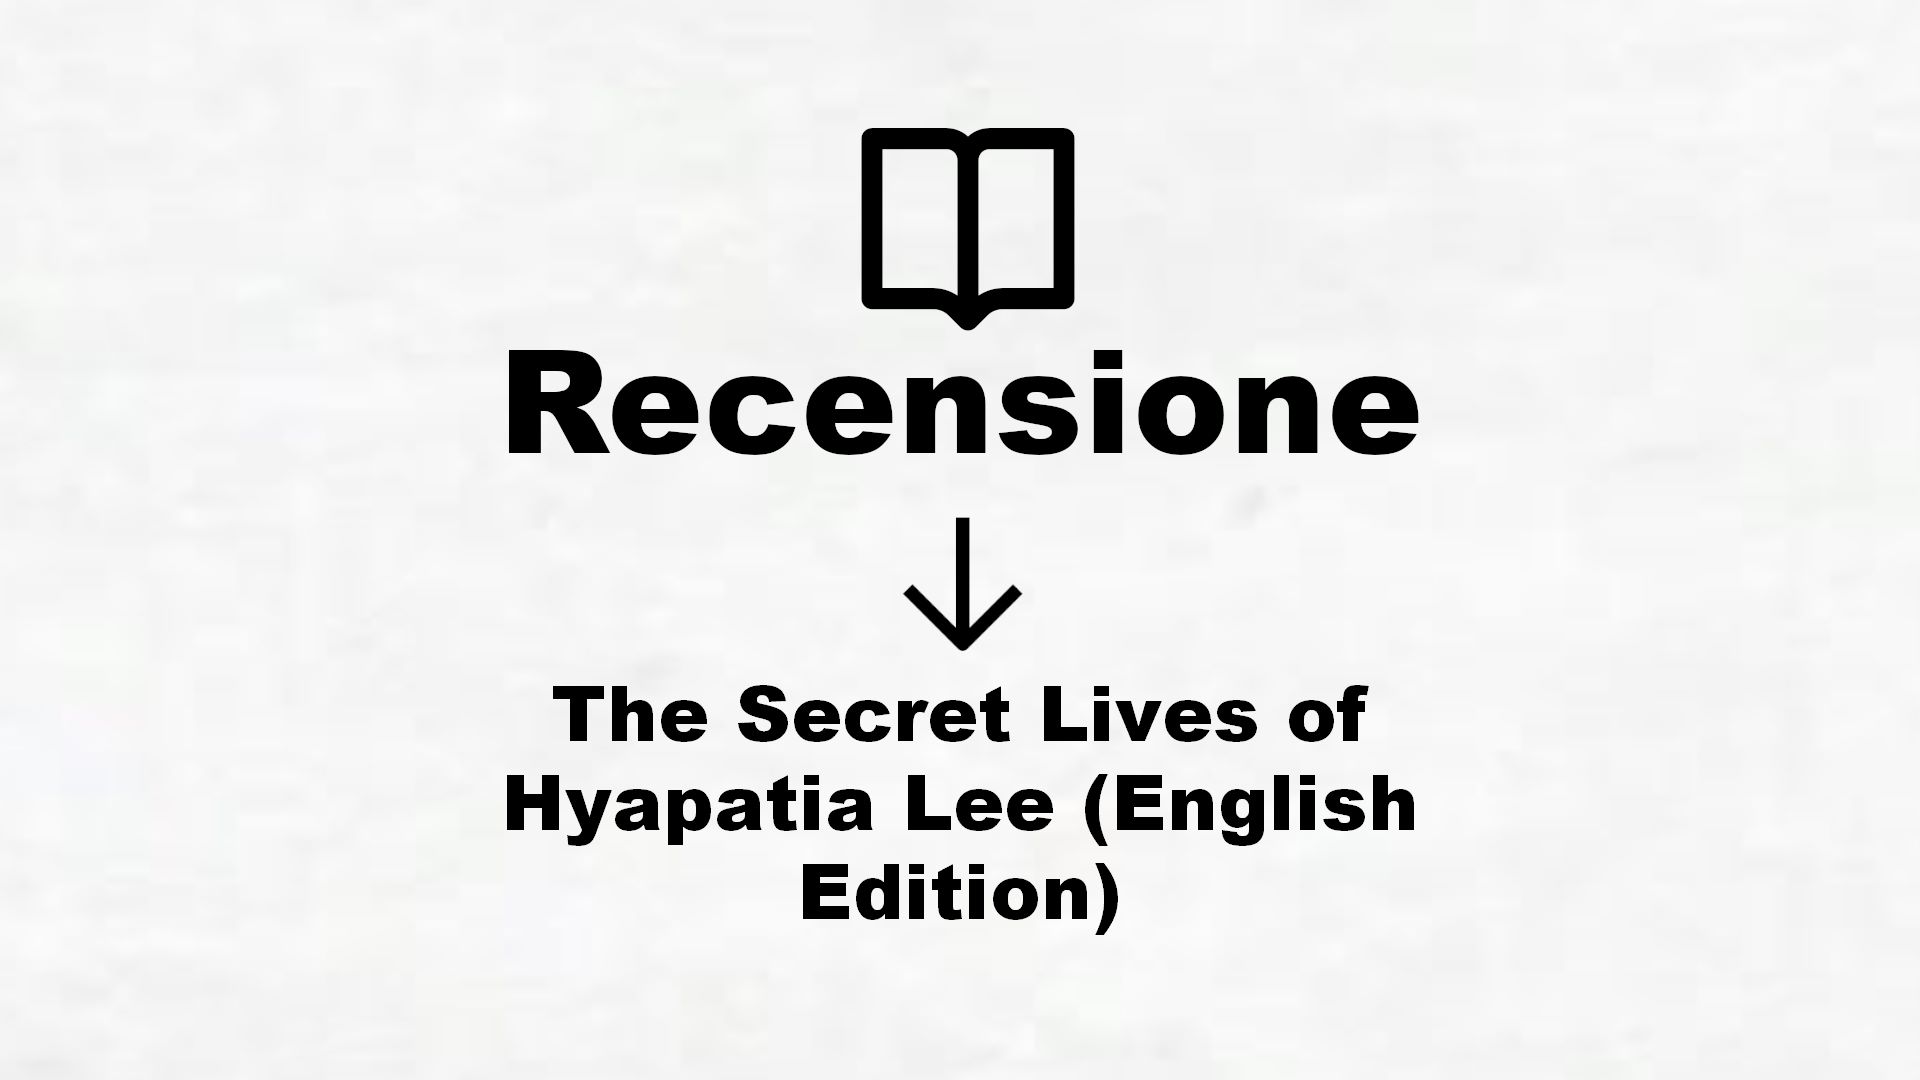 The Secret Lives of Hyapatia Lee (English Edition) – Recensione Libro